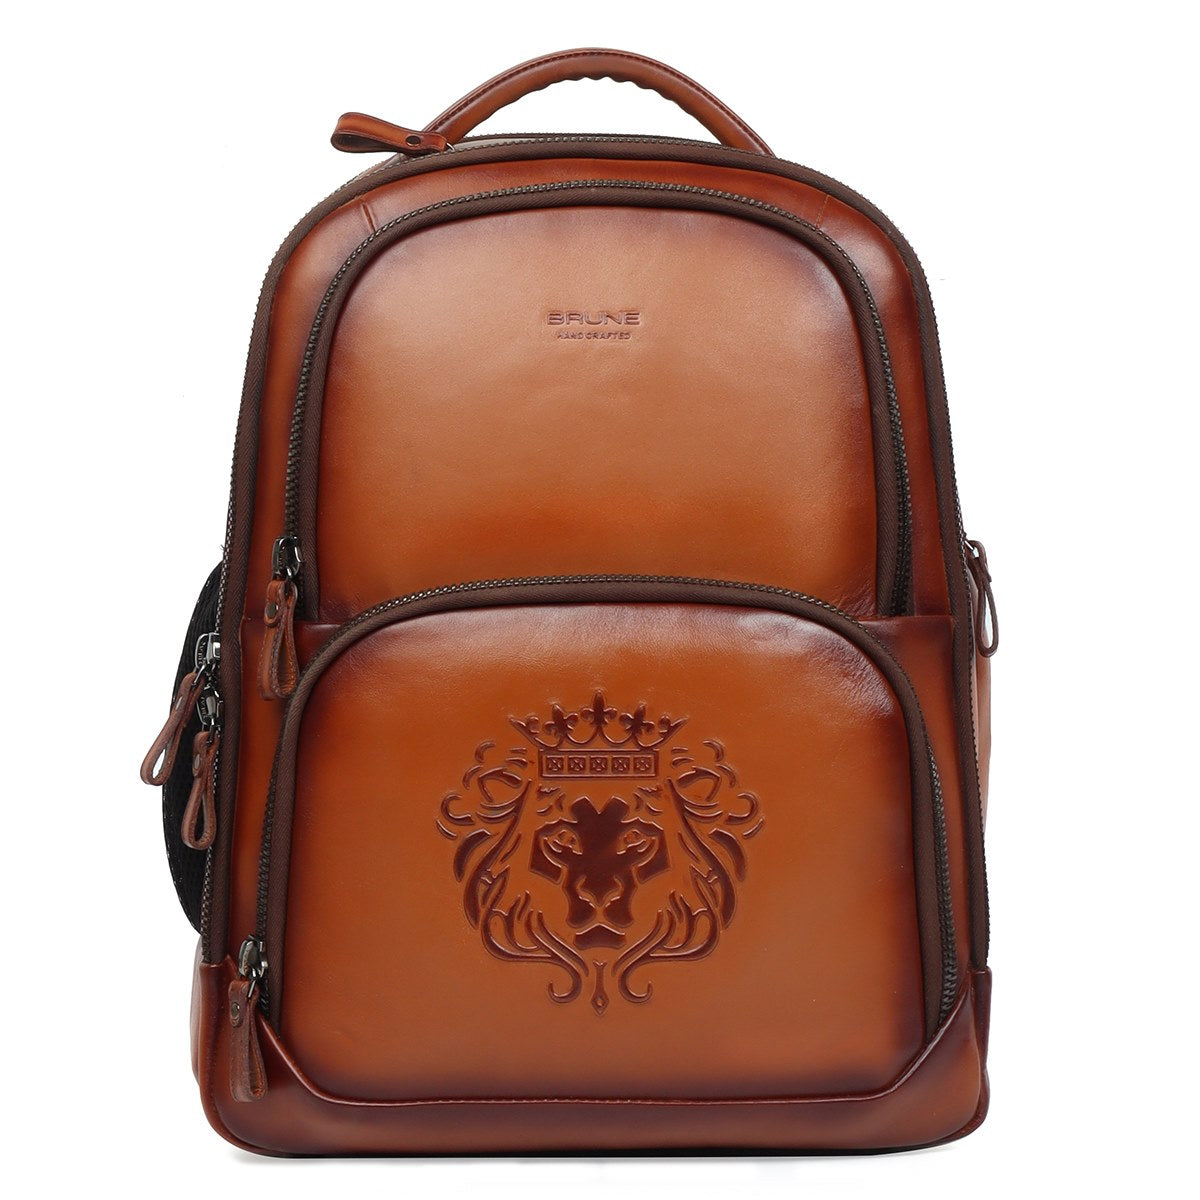 Super Functional Tan Leather Backpack by Brune & Bareskin